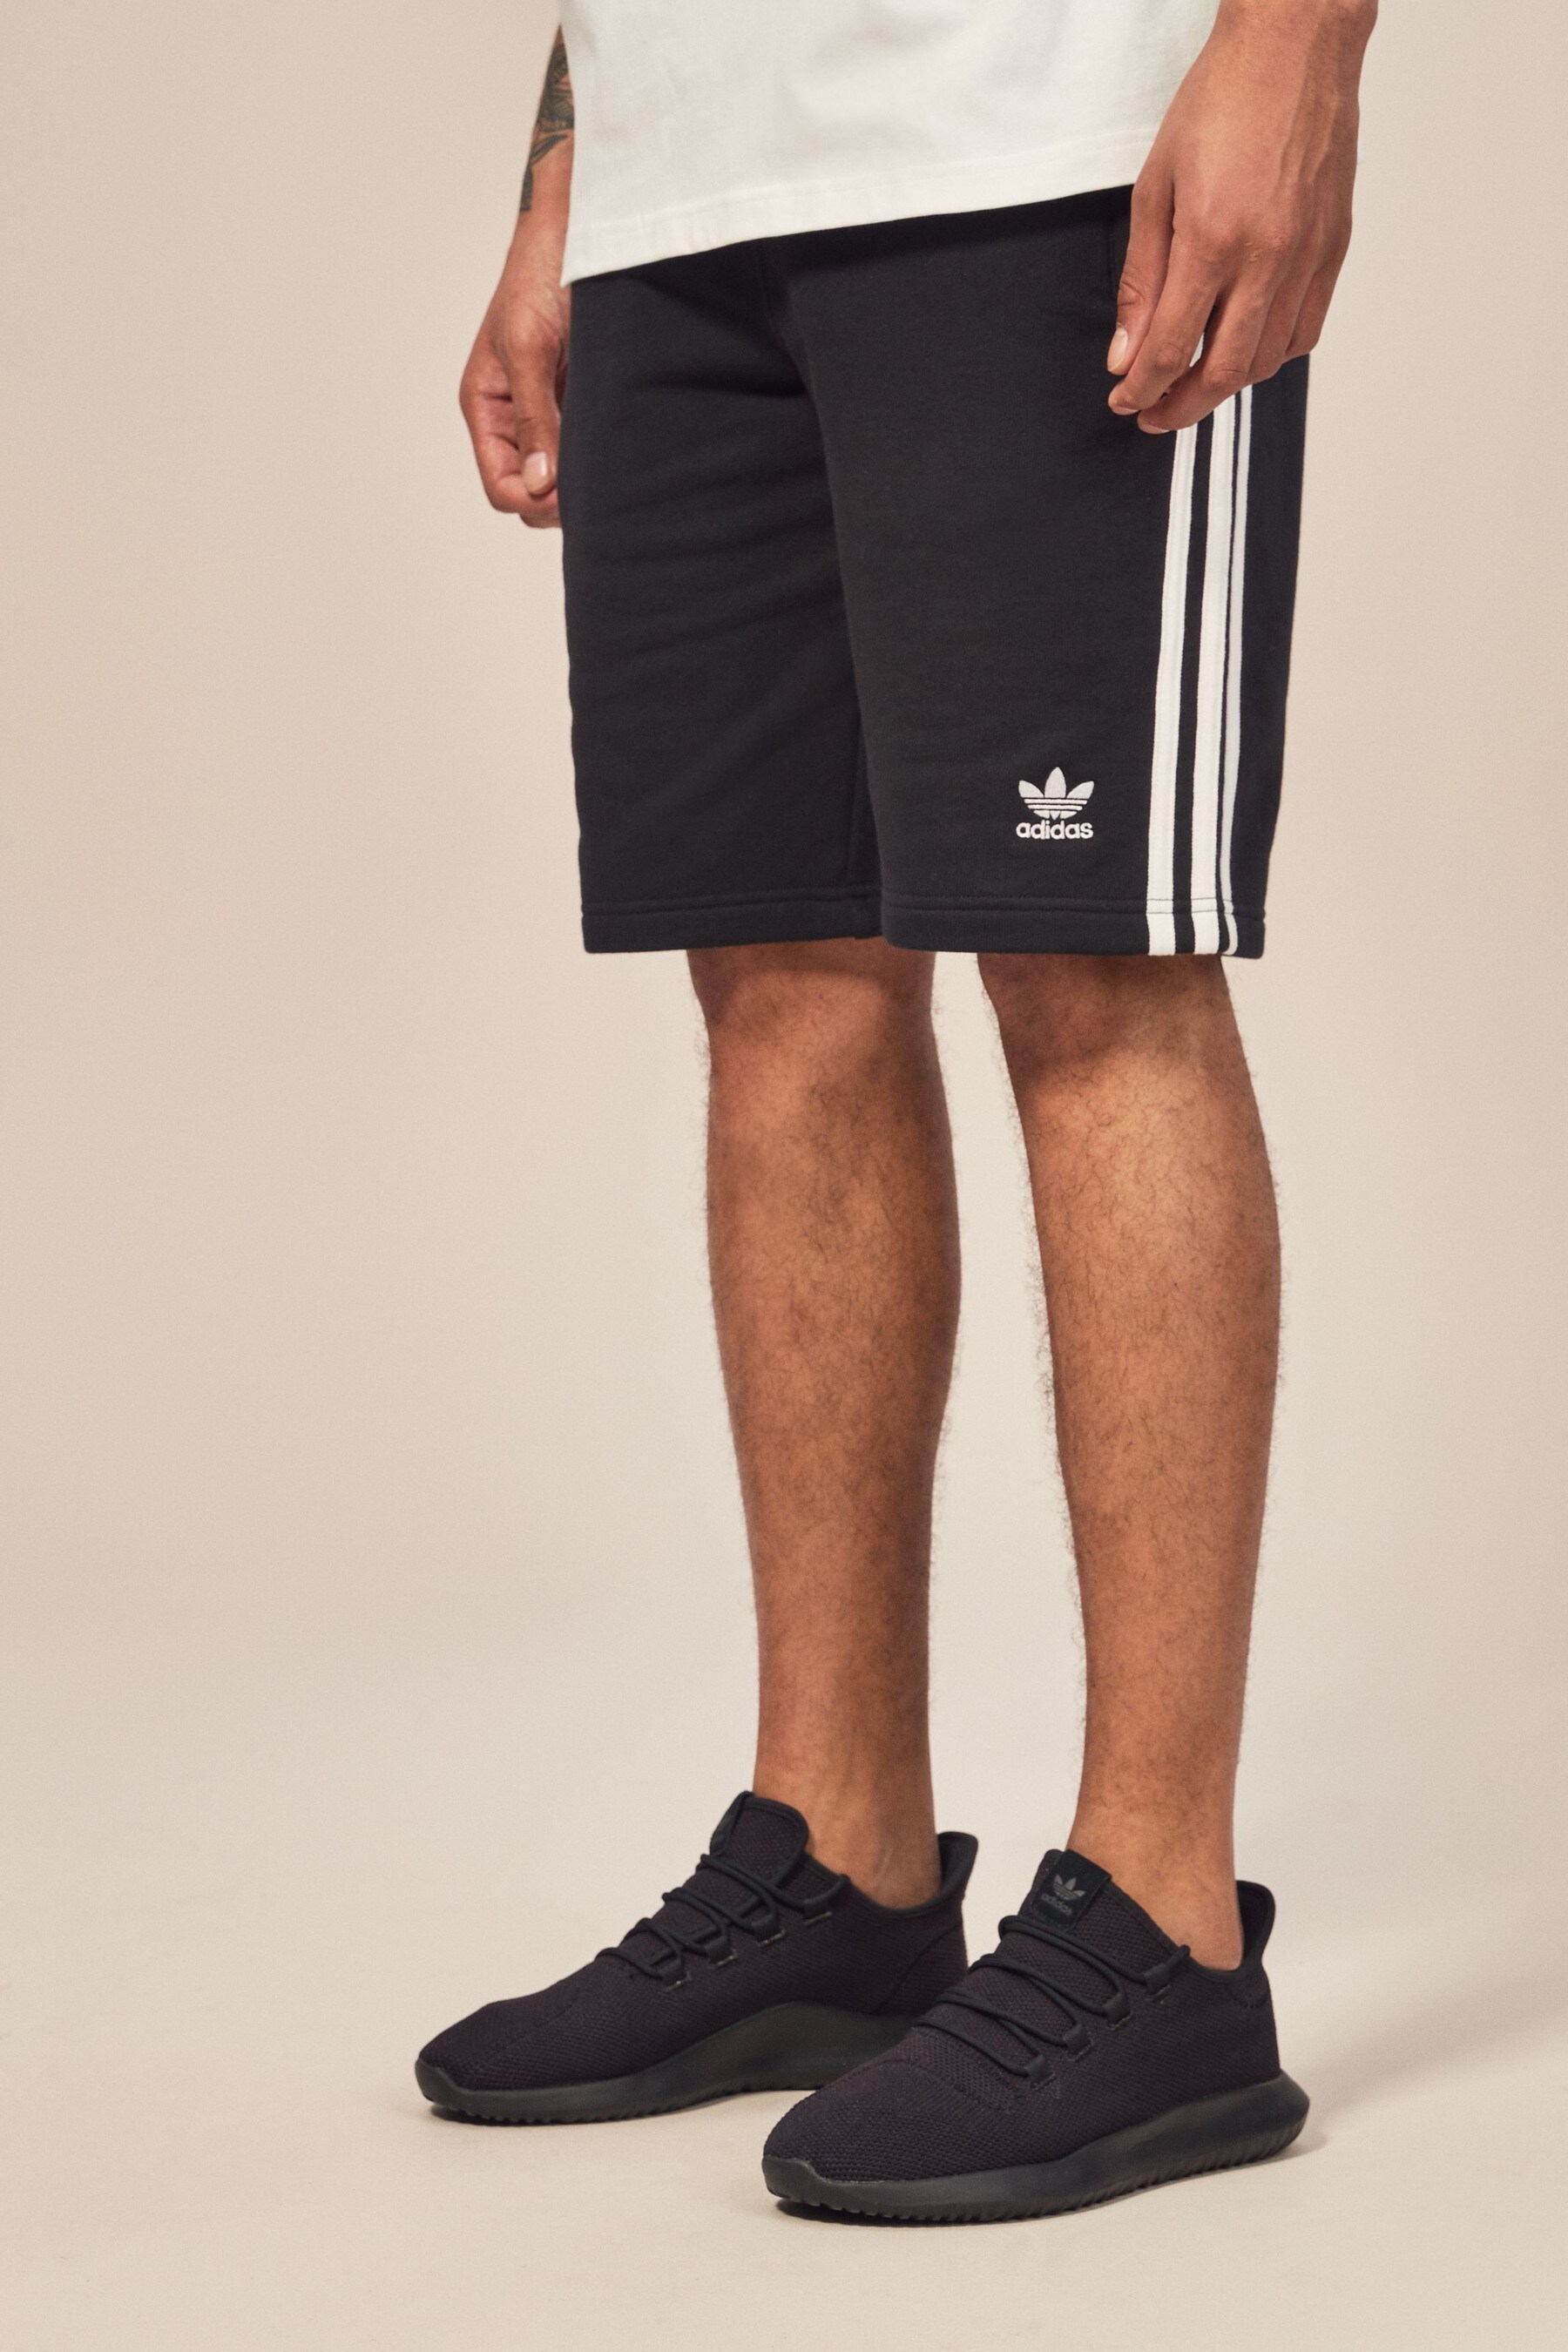 Buy adidas Originals 3 Stripe Shorts from the Next UK online shop